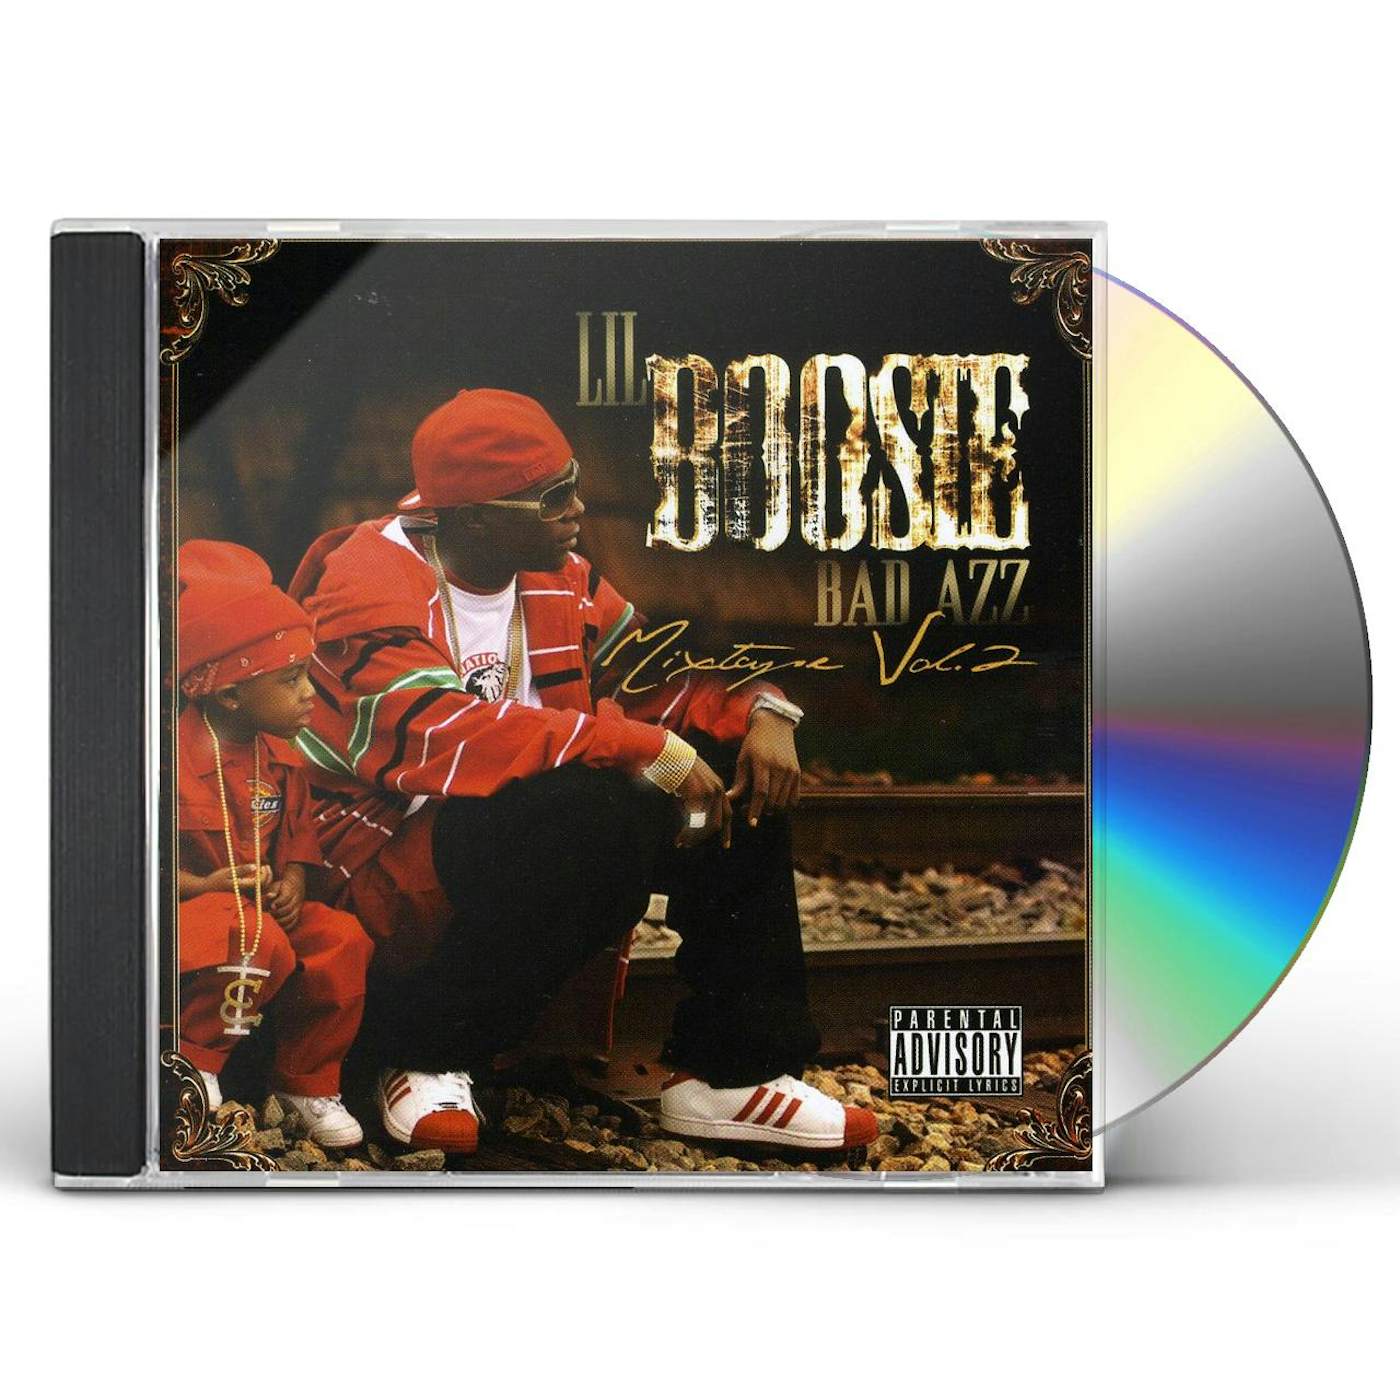 Boosie Badazz BAD AZZ MIZTAPE 2 CD